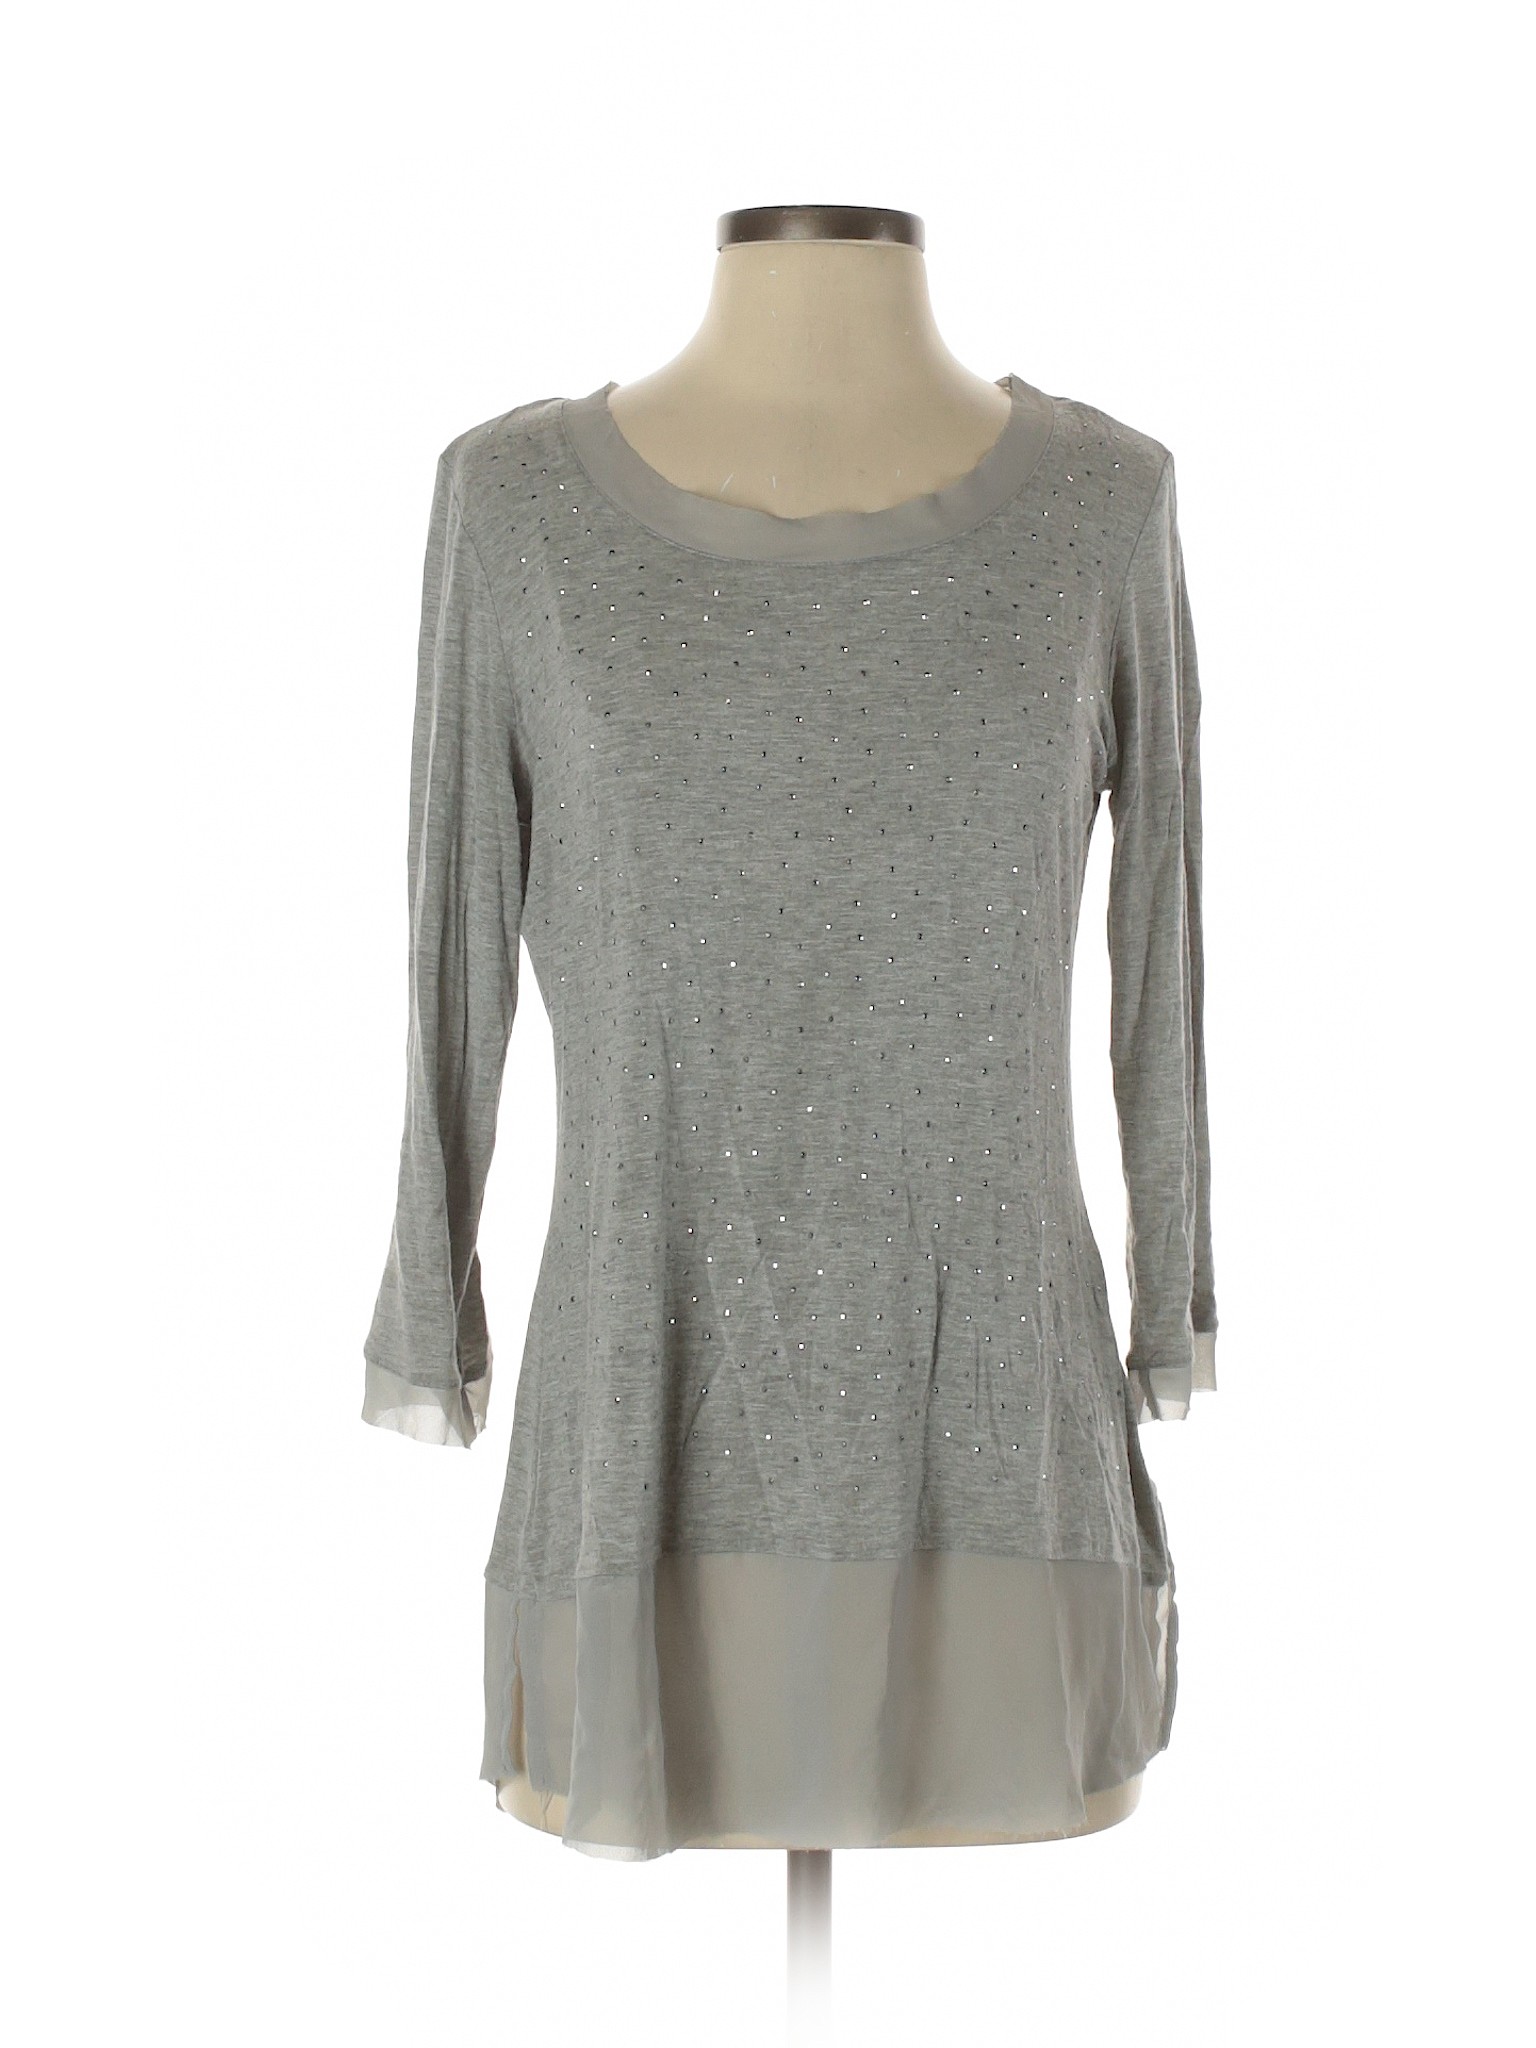 Belldini Women Gray 3/4 Sleeve Top S | eBay